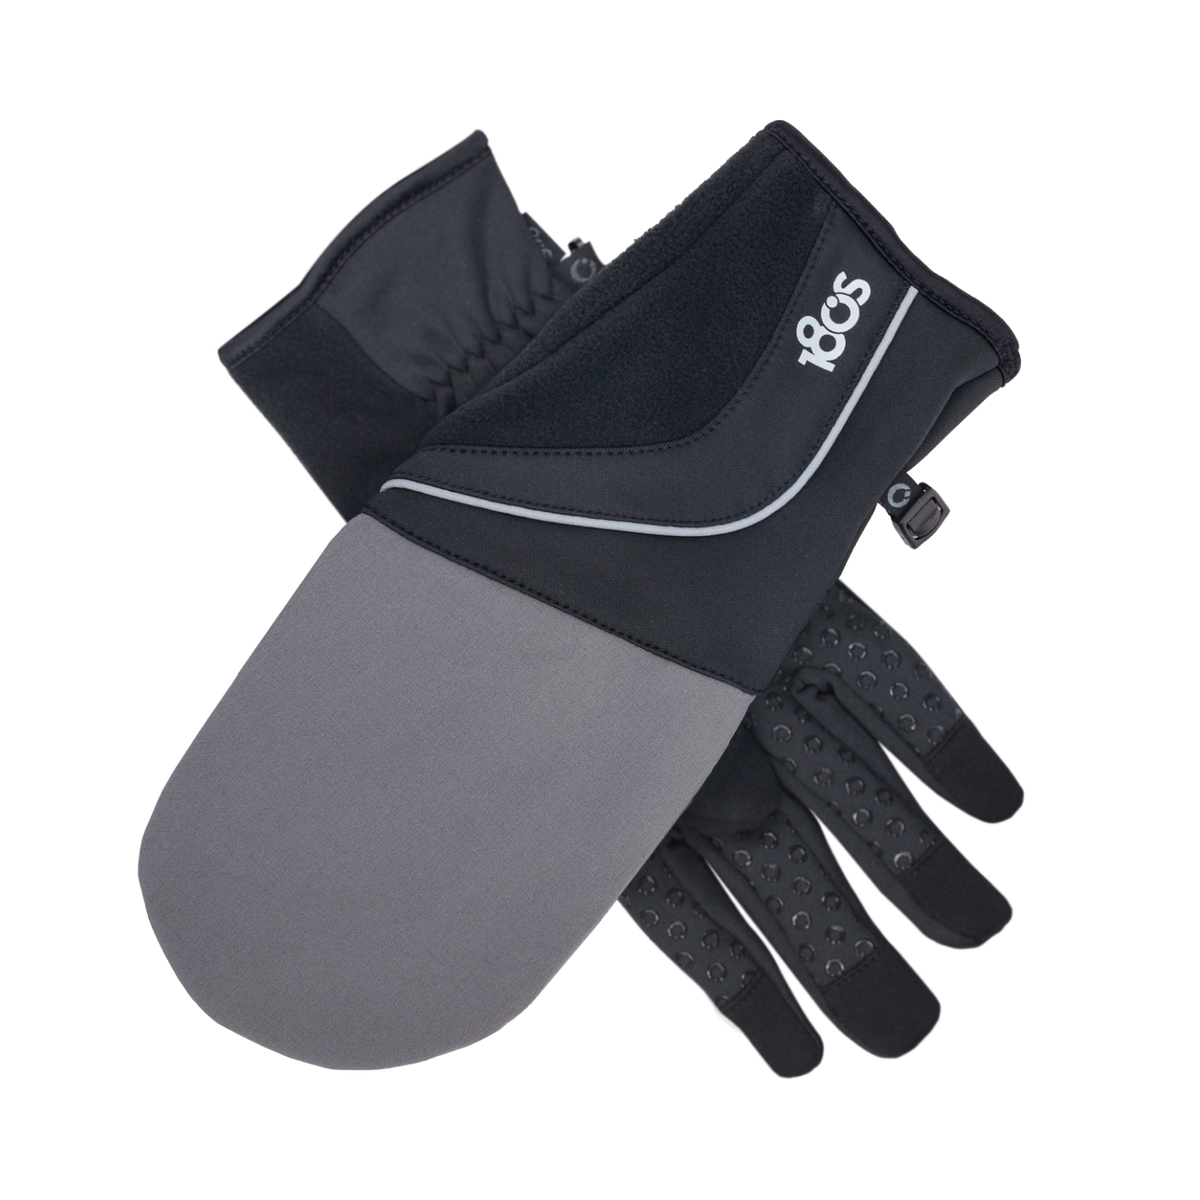 Convertible Running Gloves Black/Charcoal Gray